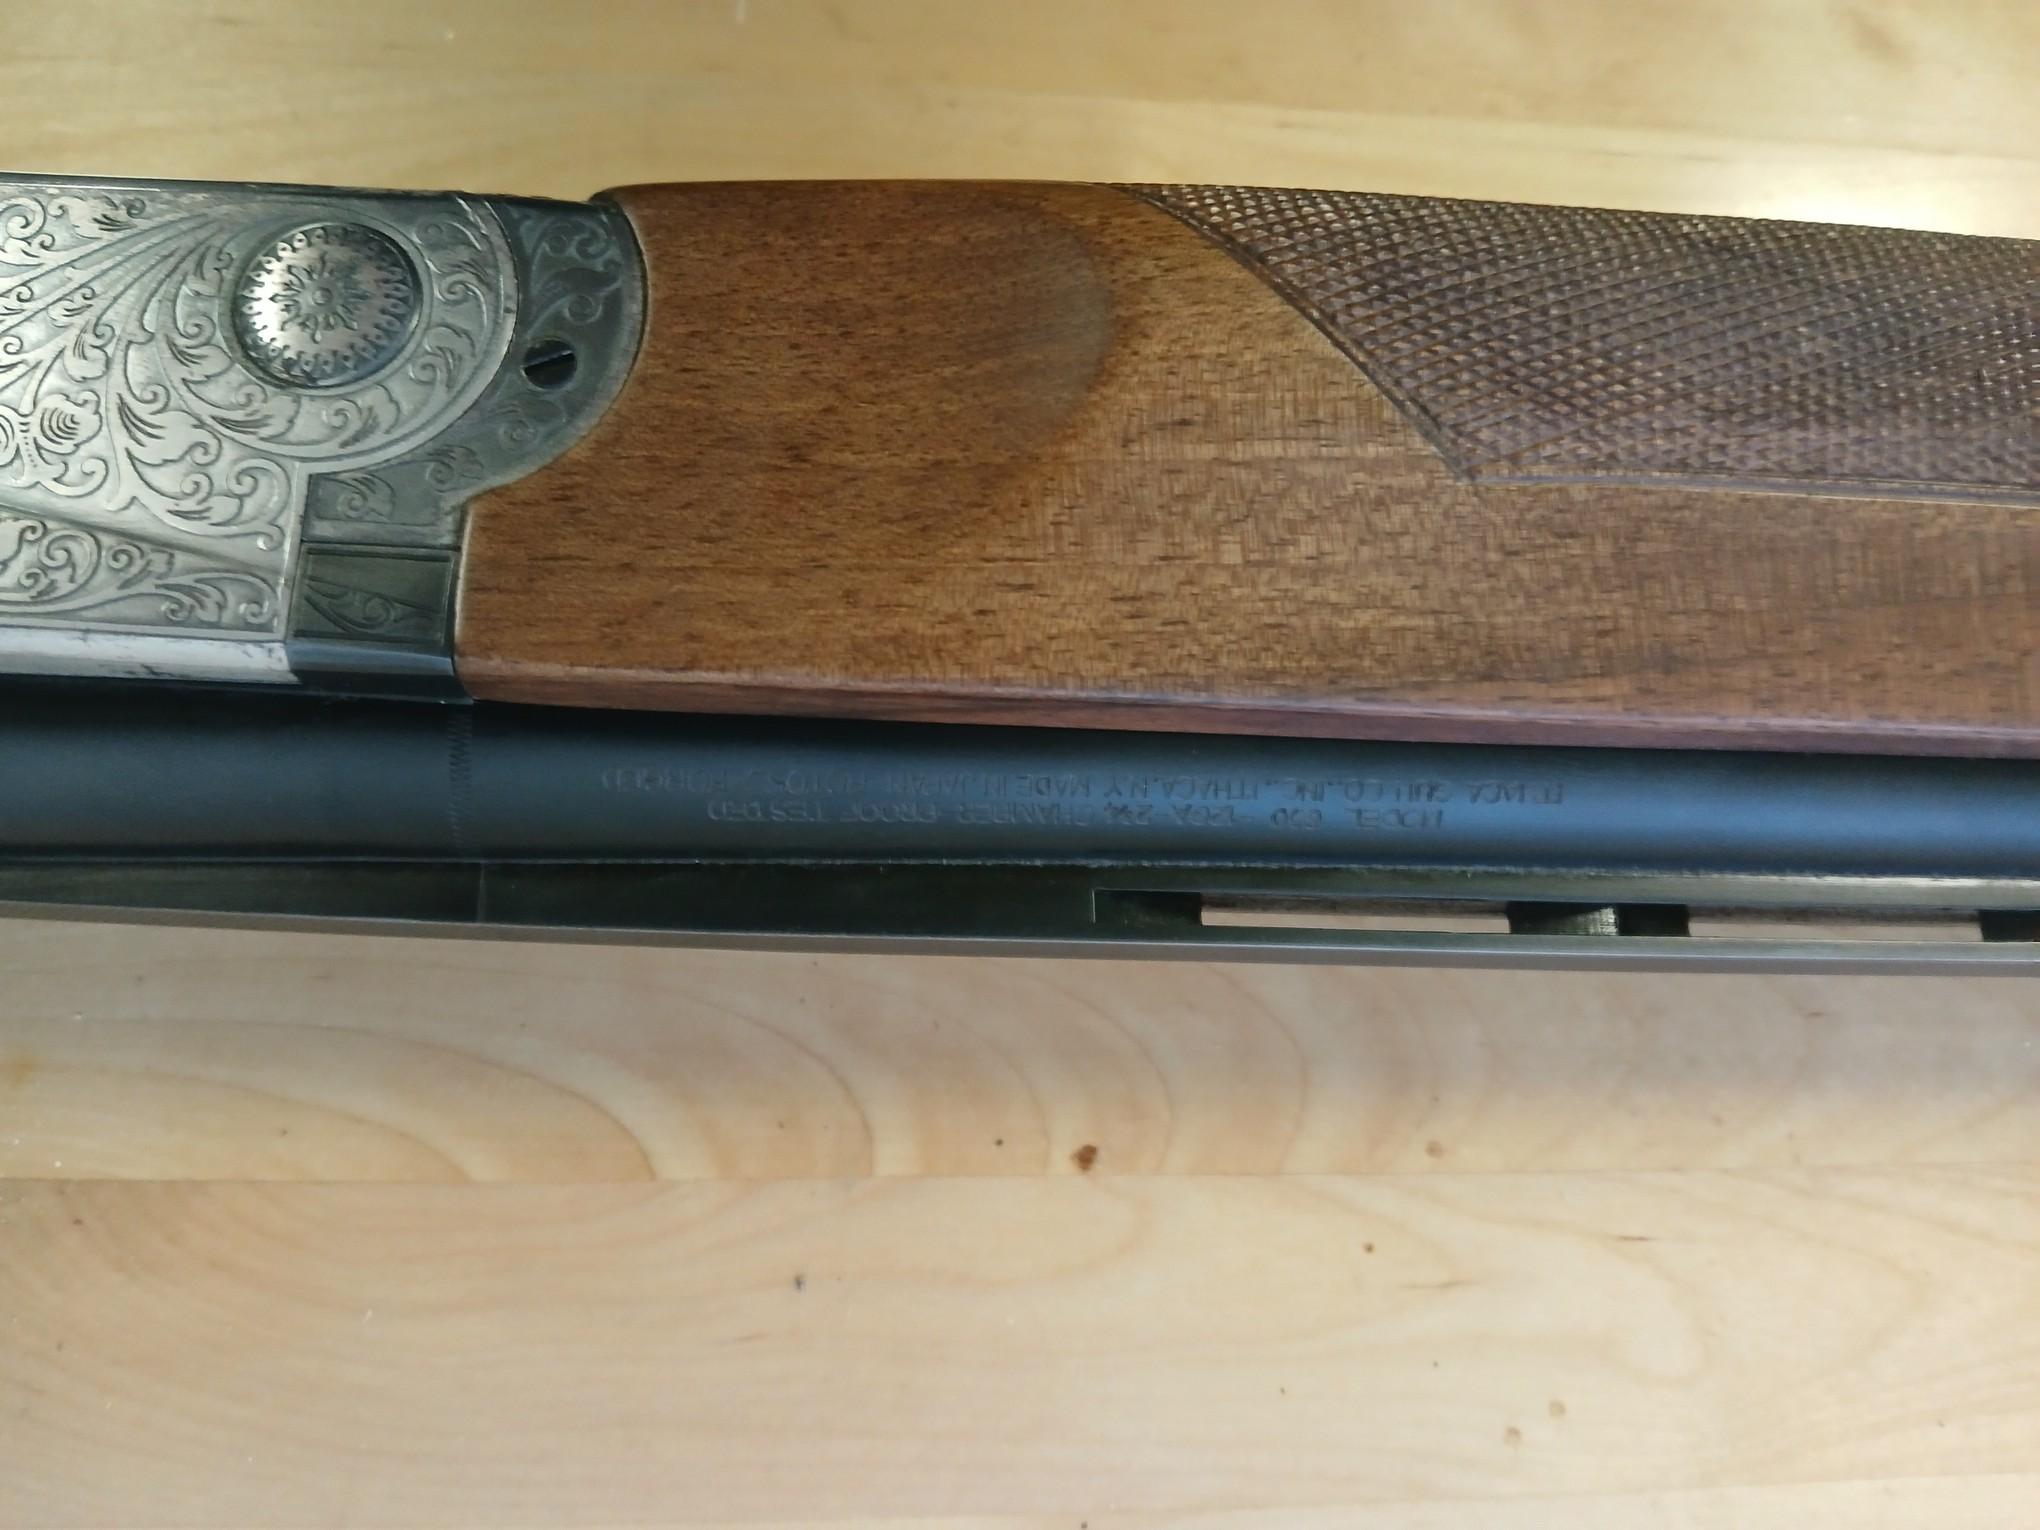 Set of Custome 20 Guage & 12 Guage Shot Guns W/ Carrying Case - Antique / Vintage Bird Gun Set - Fam